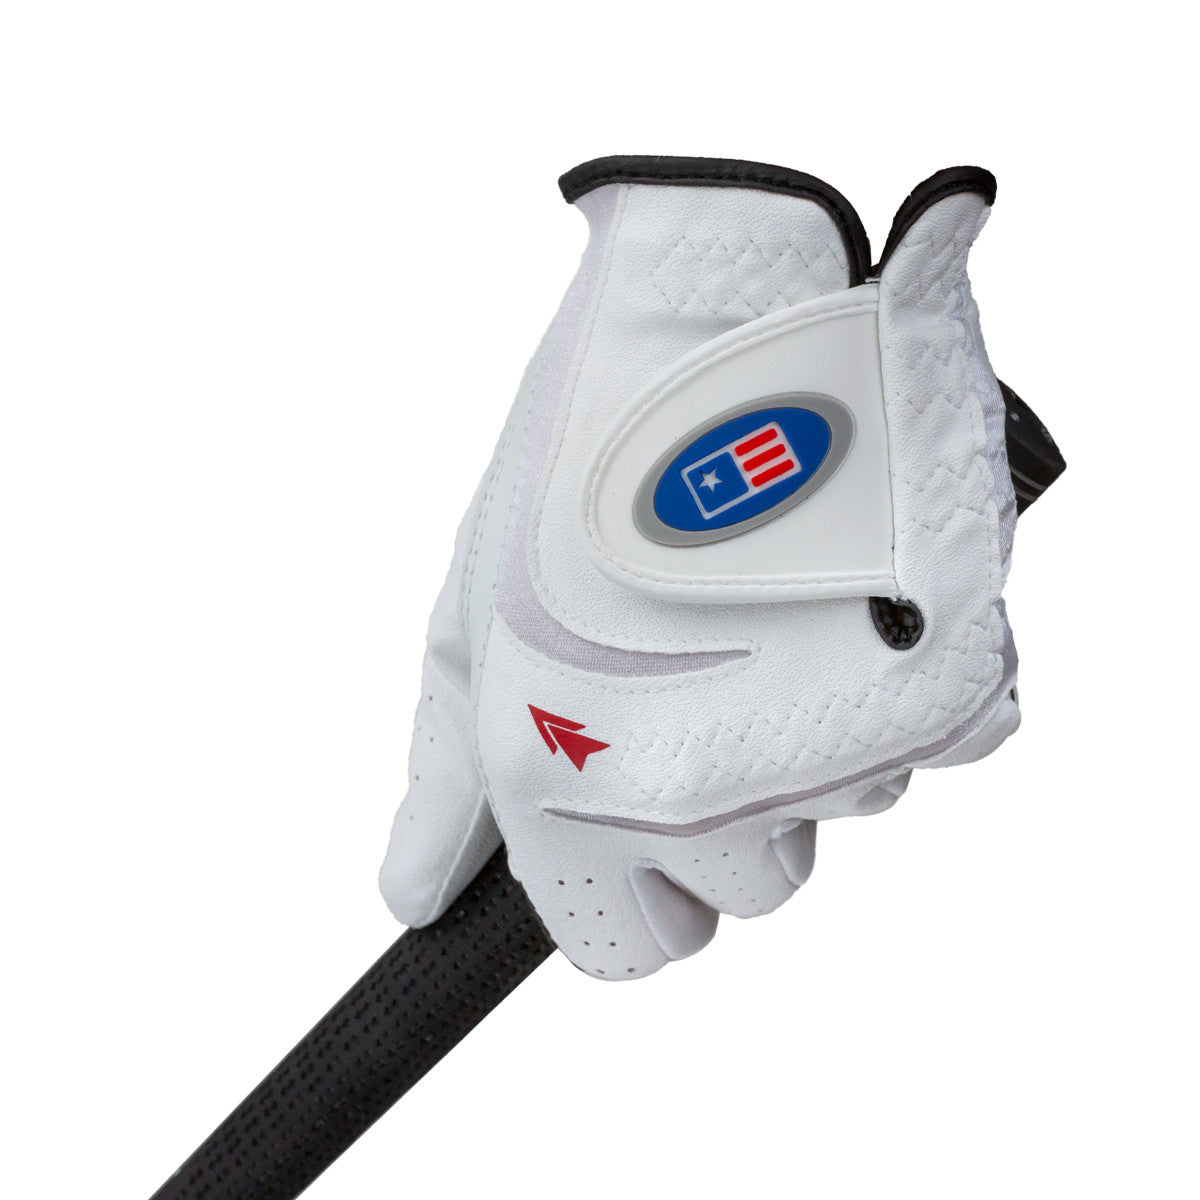 U.S. Kids Good Grip Golf Glove